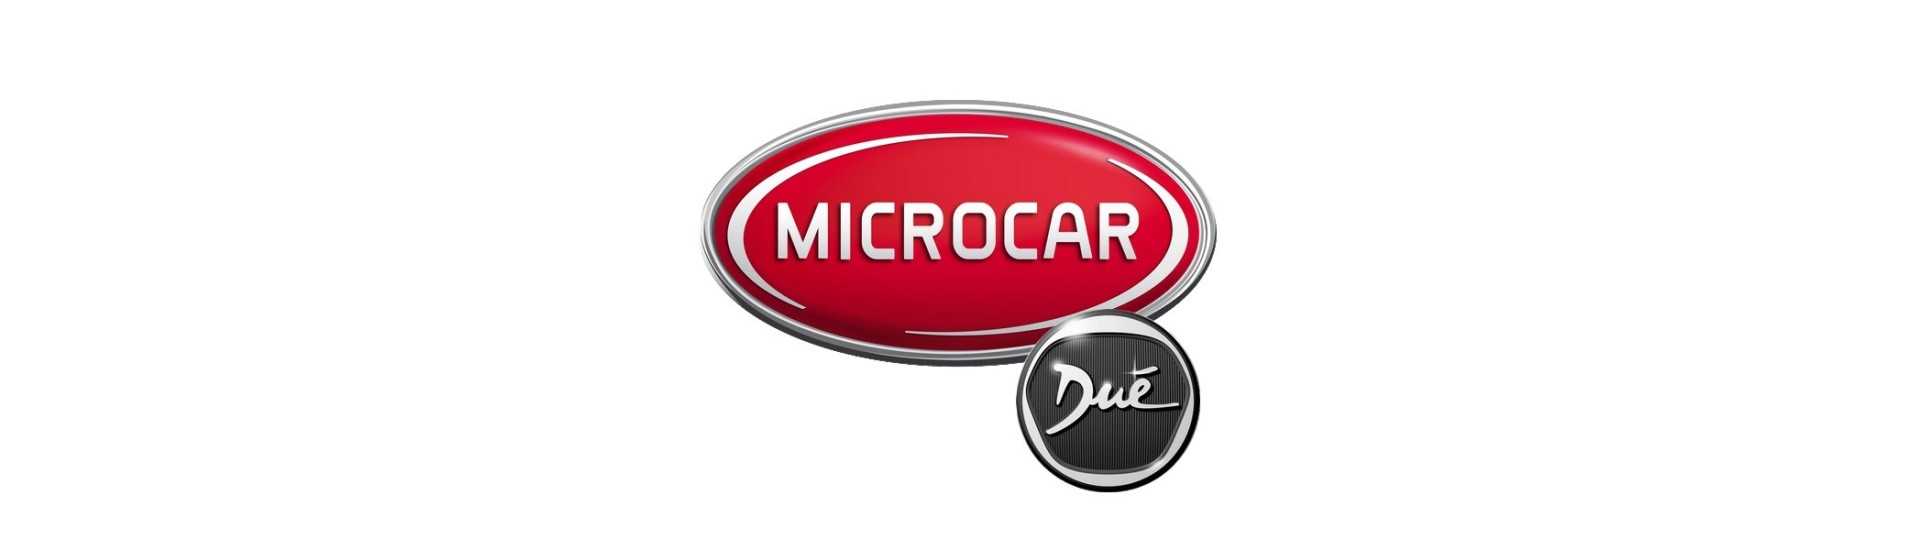 Dörr öppning kabel bästa prisbil utan licens Microcar Dué